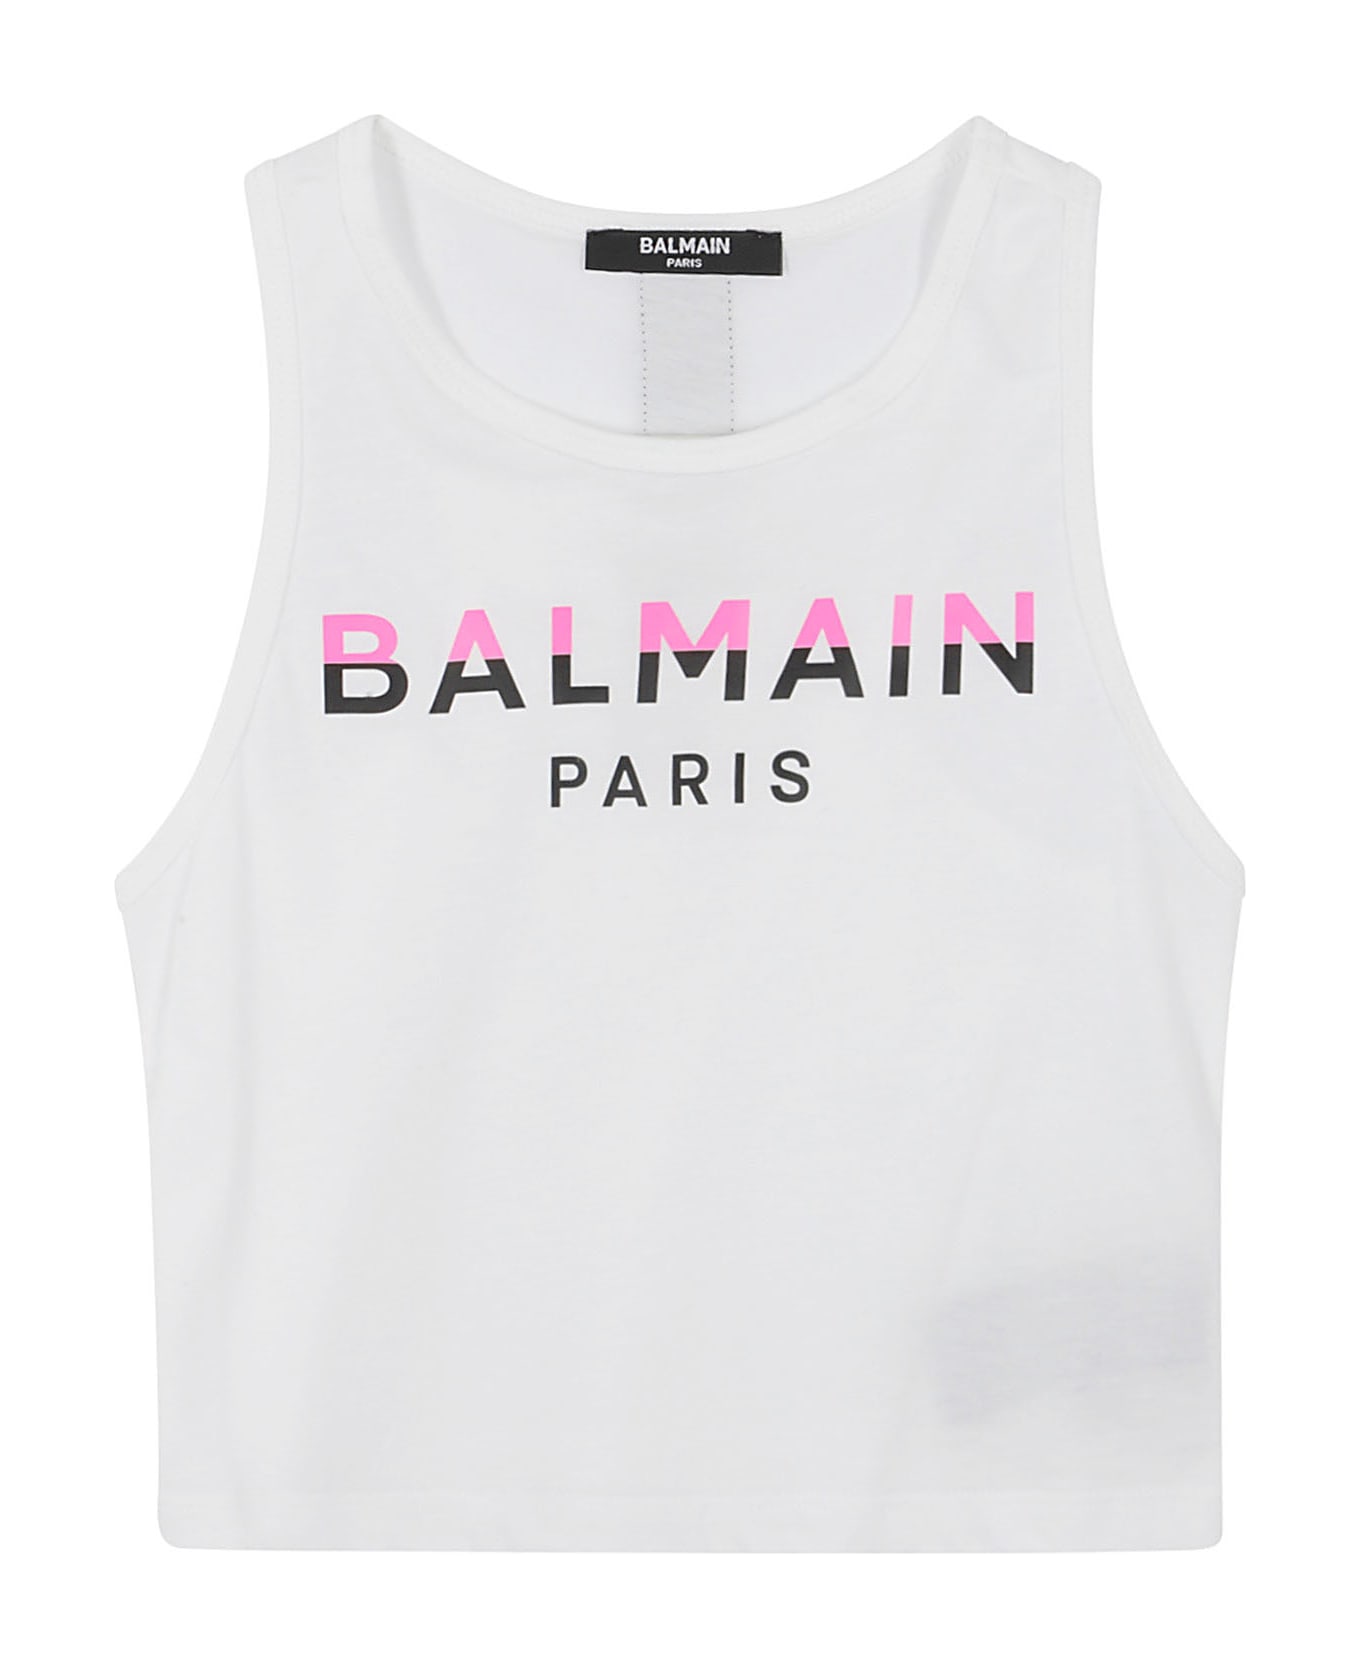 Balmain T Shirt - Polo Ralph Lauren Giacca di felpa marino grigio sfumato